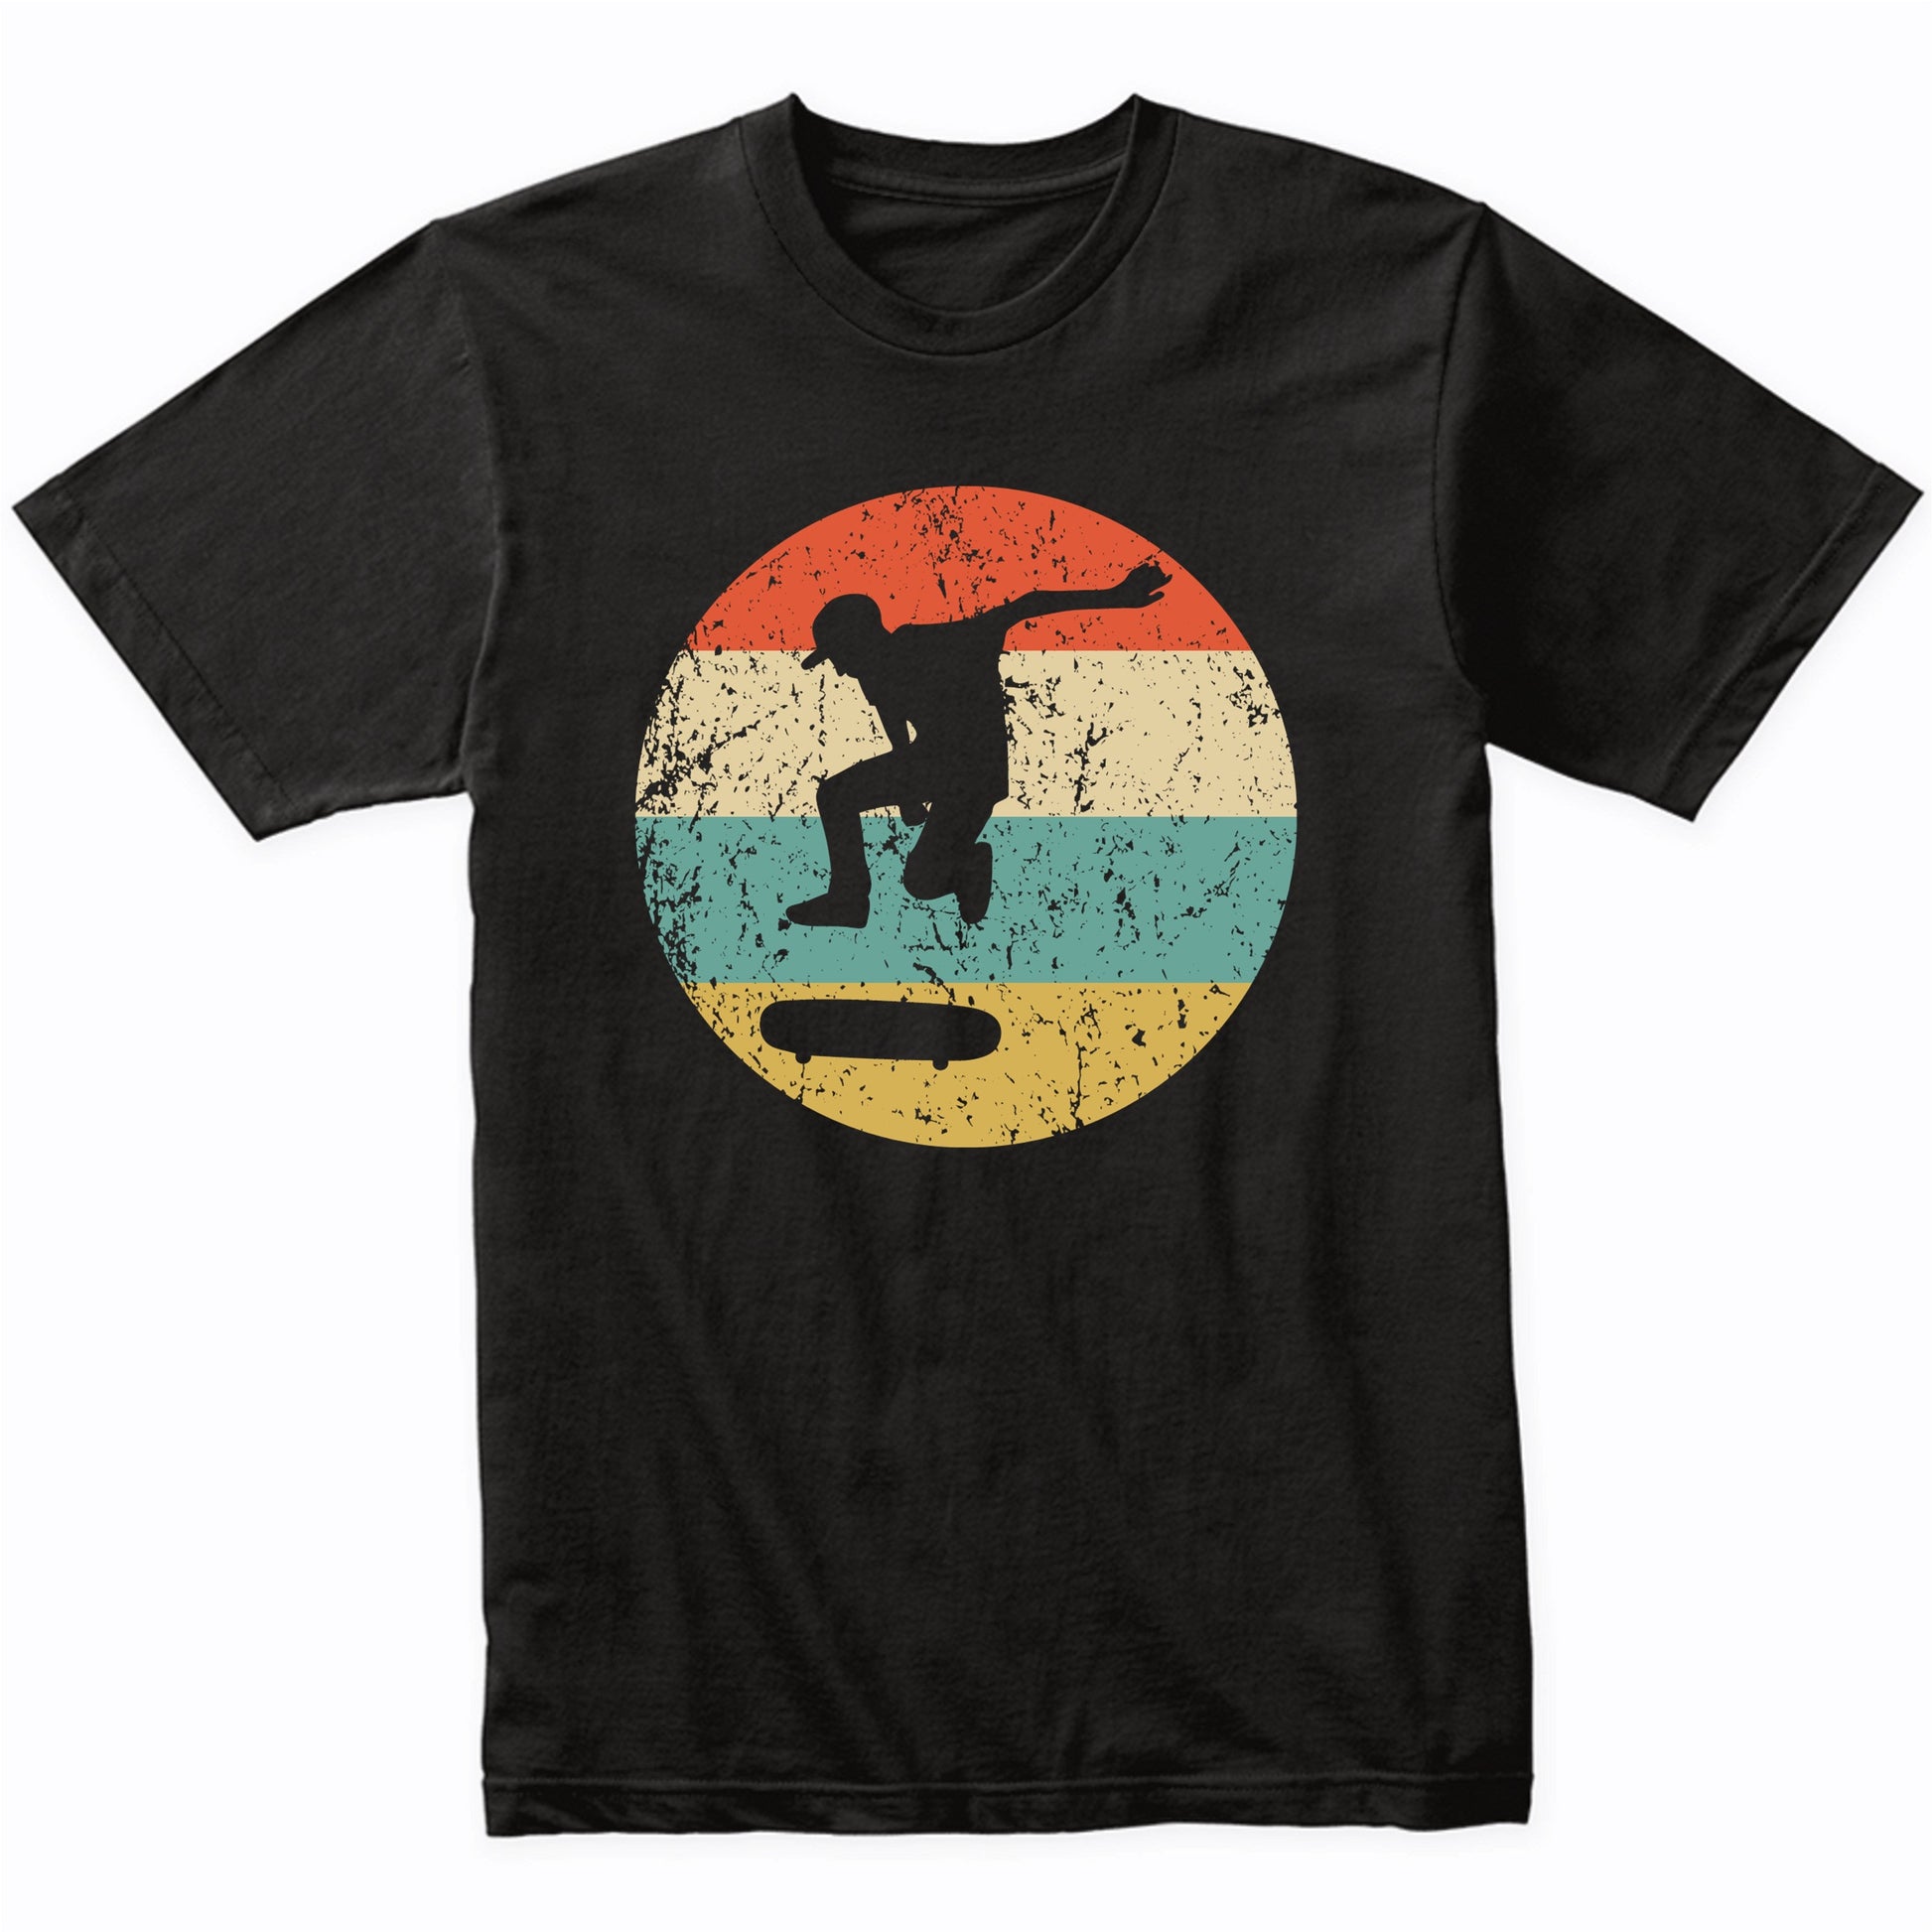 Skateboarding Shirt - Vintage Retro Skateboarder T-Shirt